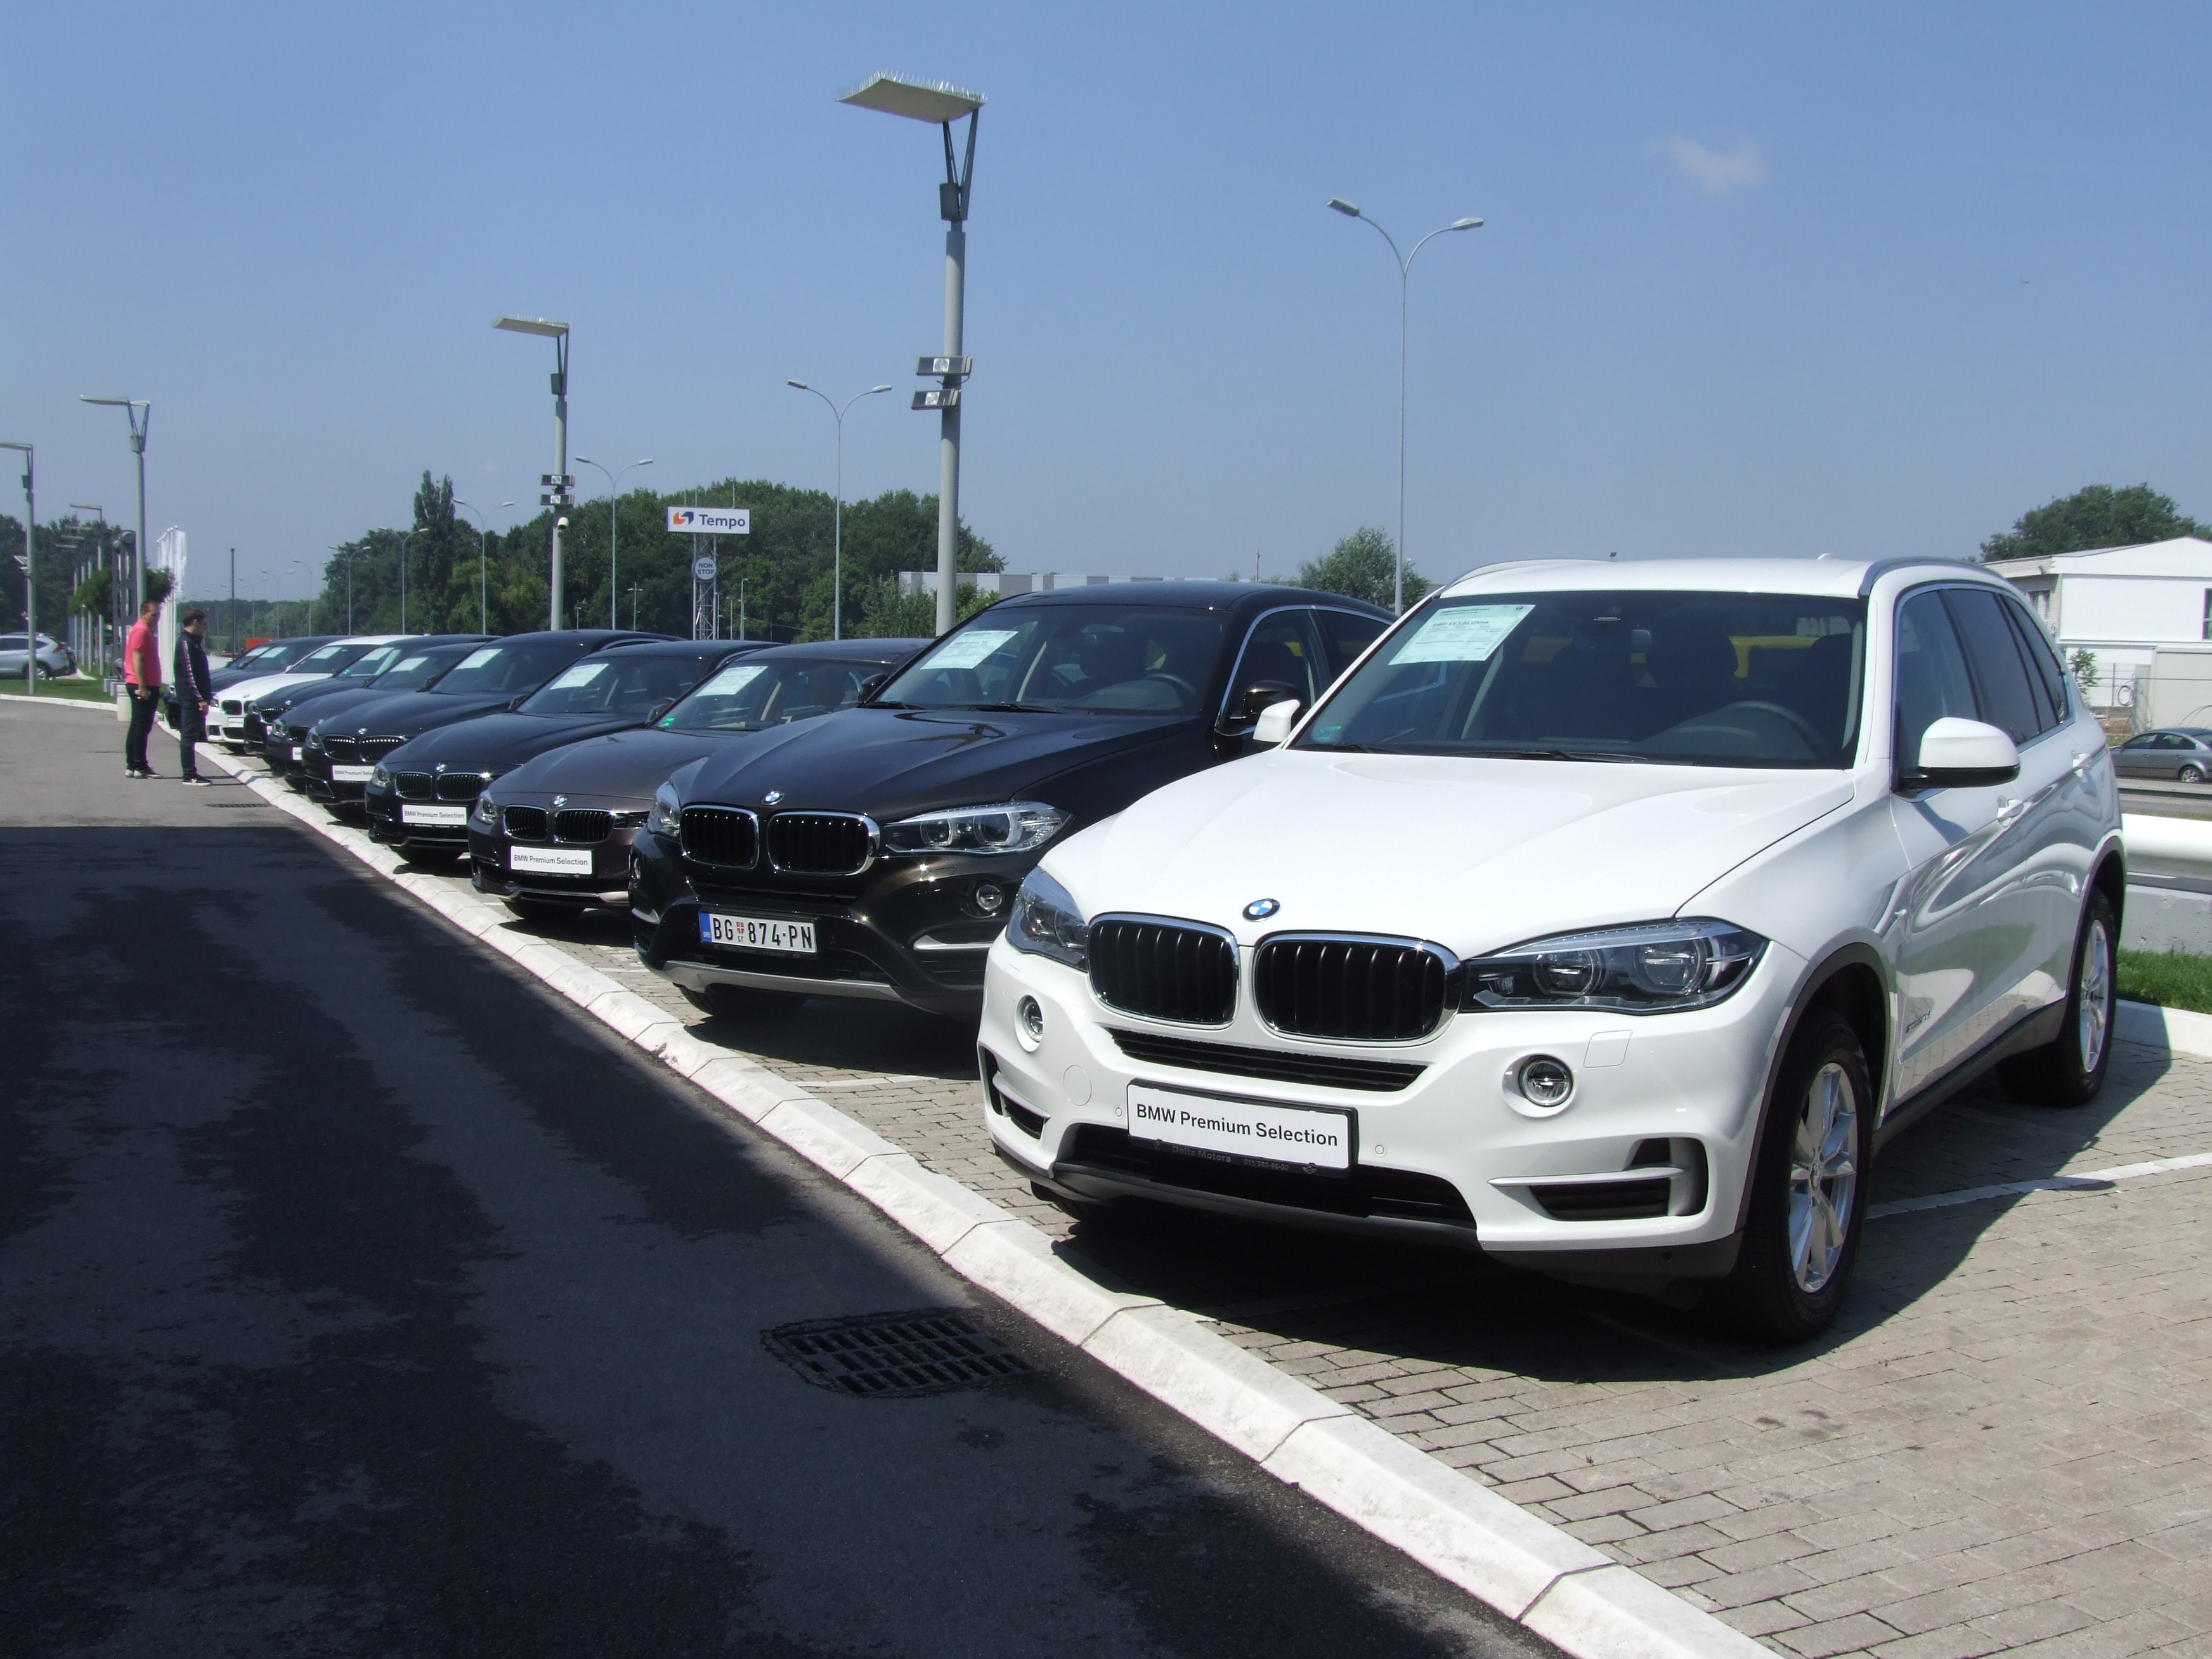 Dan korišćenih vozila u salonu BMW-a